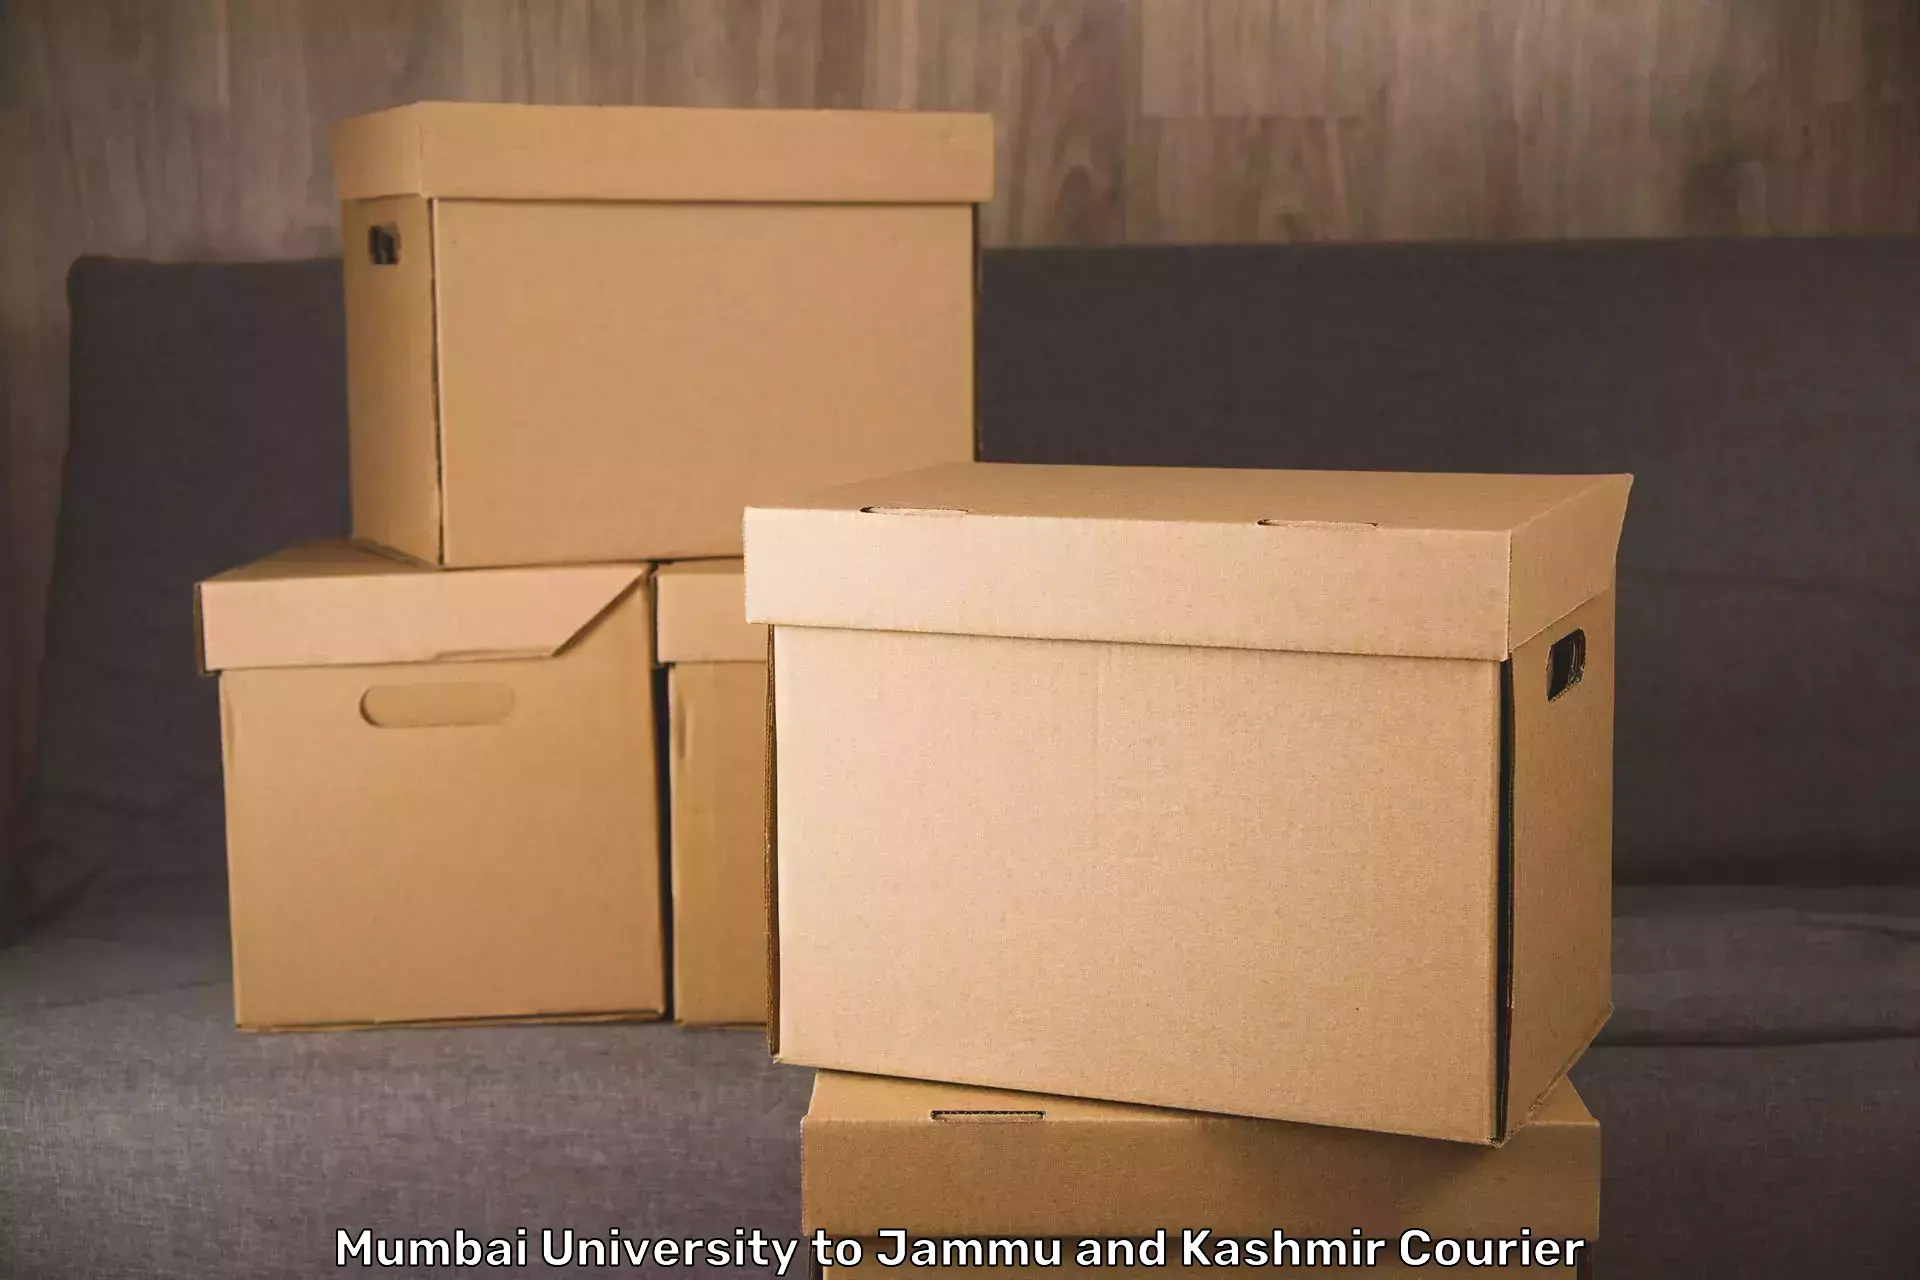 Safe luggage delivery in Mumbai University to Srinagar Kashmir